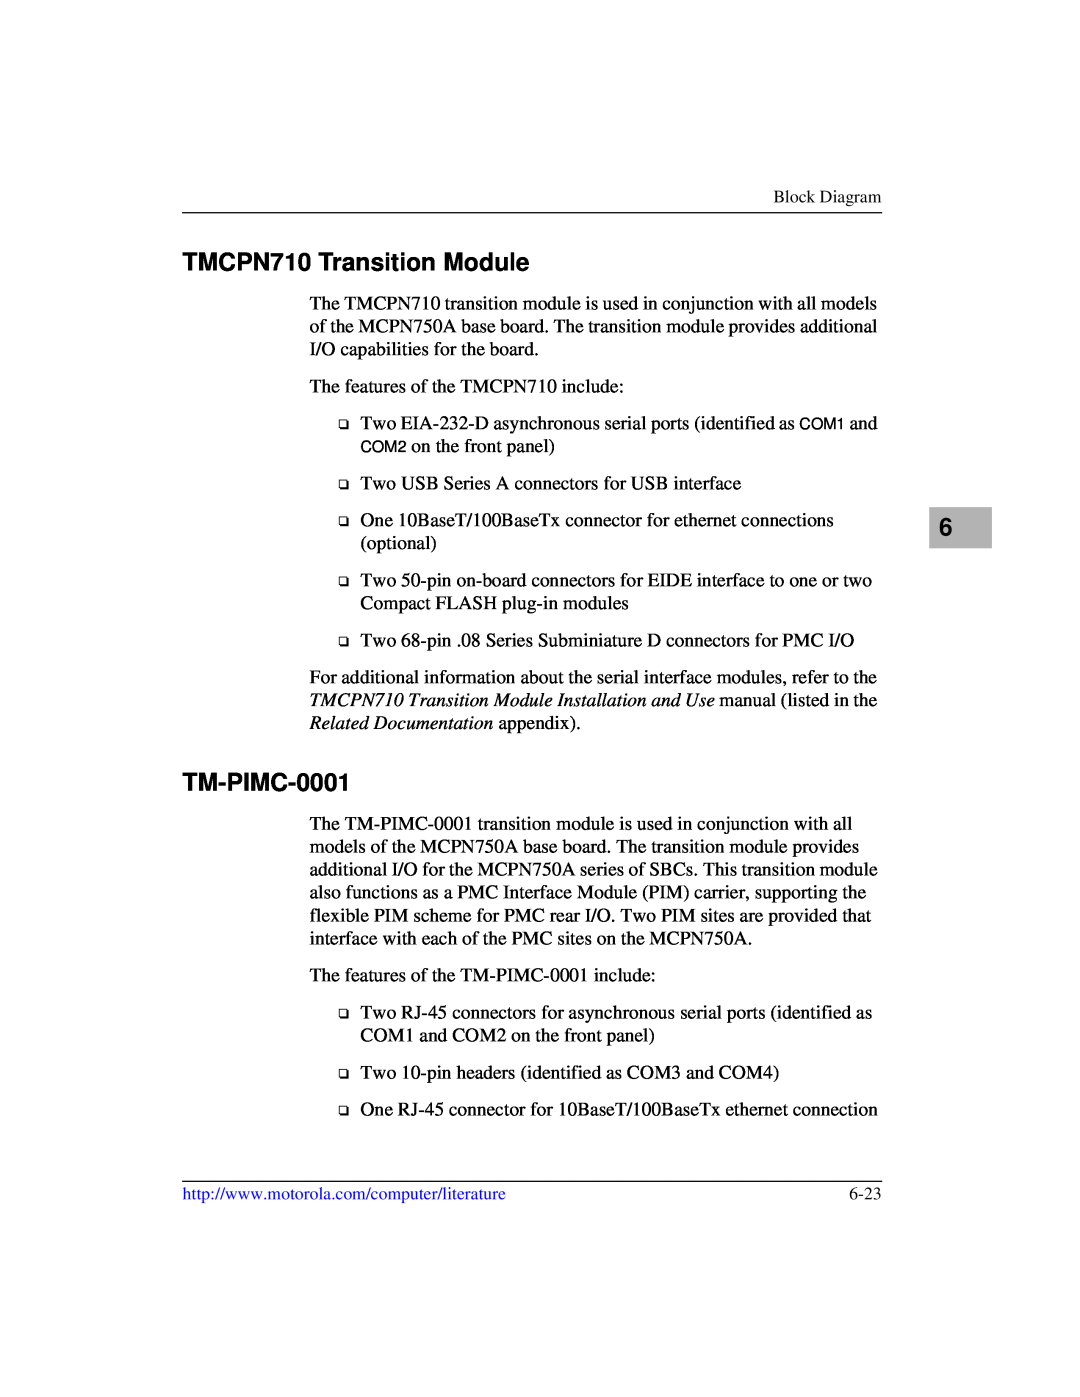 Motorola IH5, MCPN750A manual TMCPN710 Transition Module, TM-PIMC-0001 